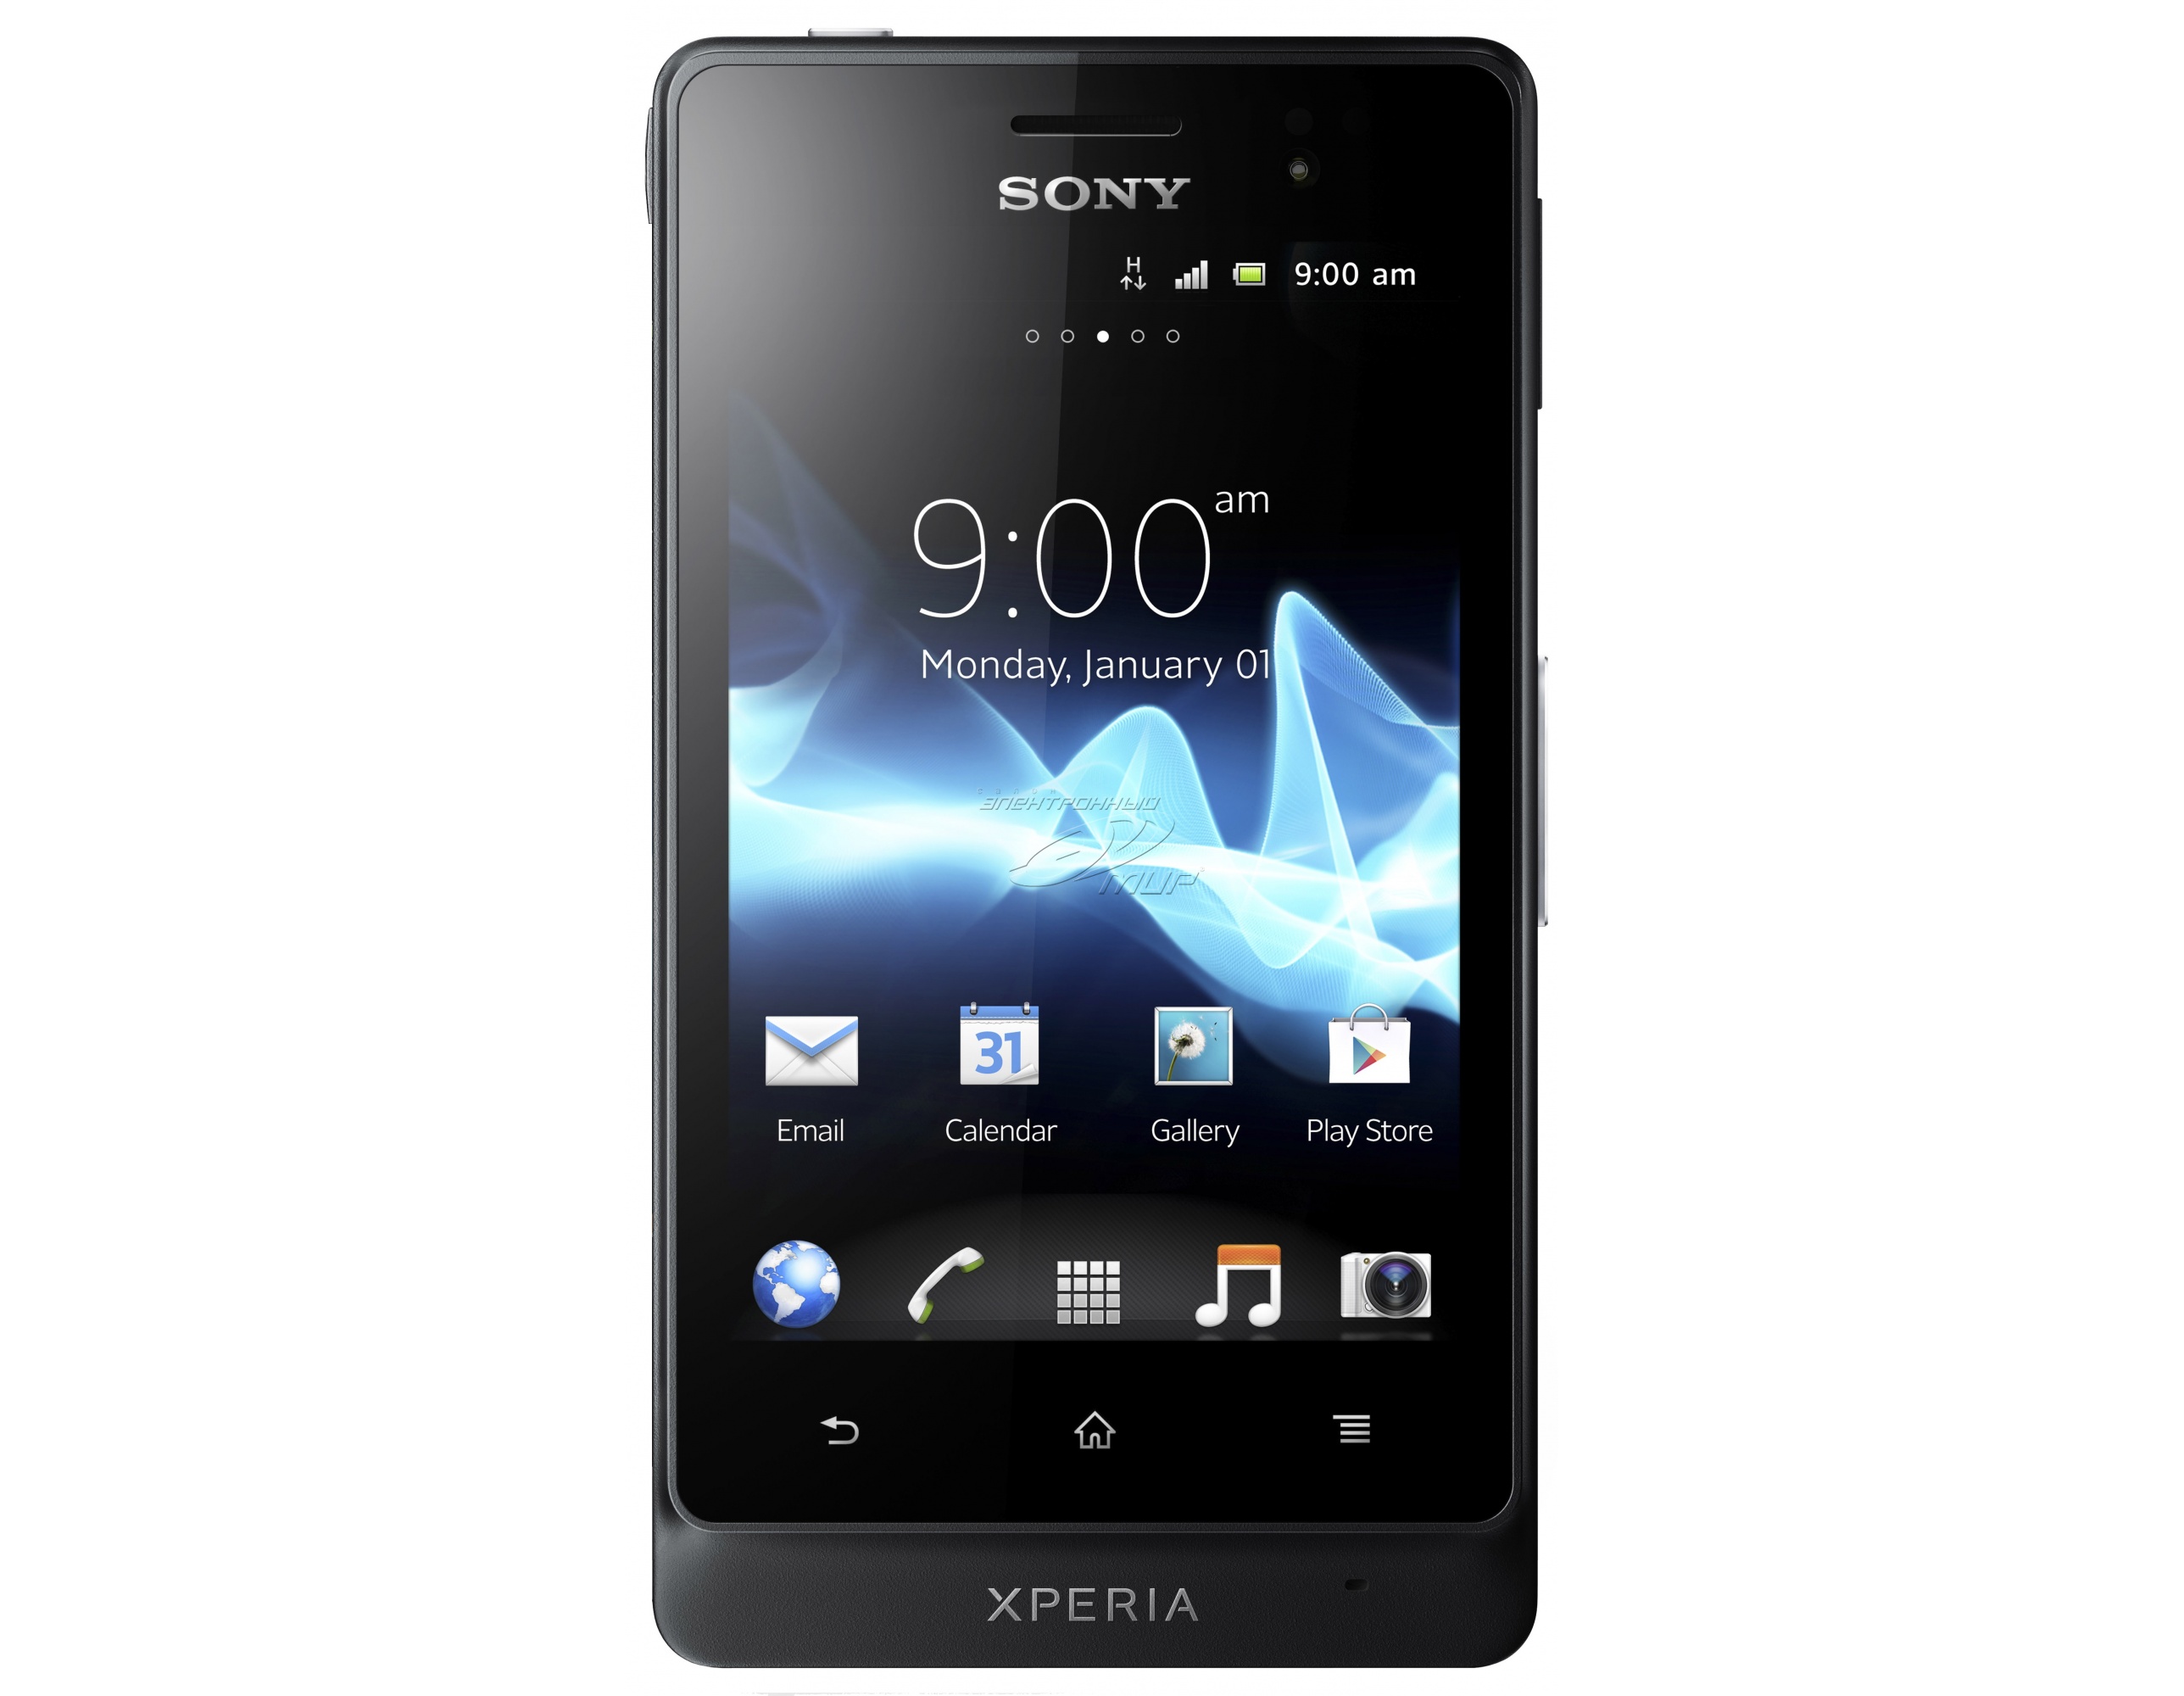 Xperia u. Sony Xperia st27i. Sony Xperia Acro s. Sony Xperia go l. Sony Ericsson lt26i.